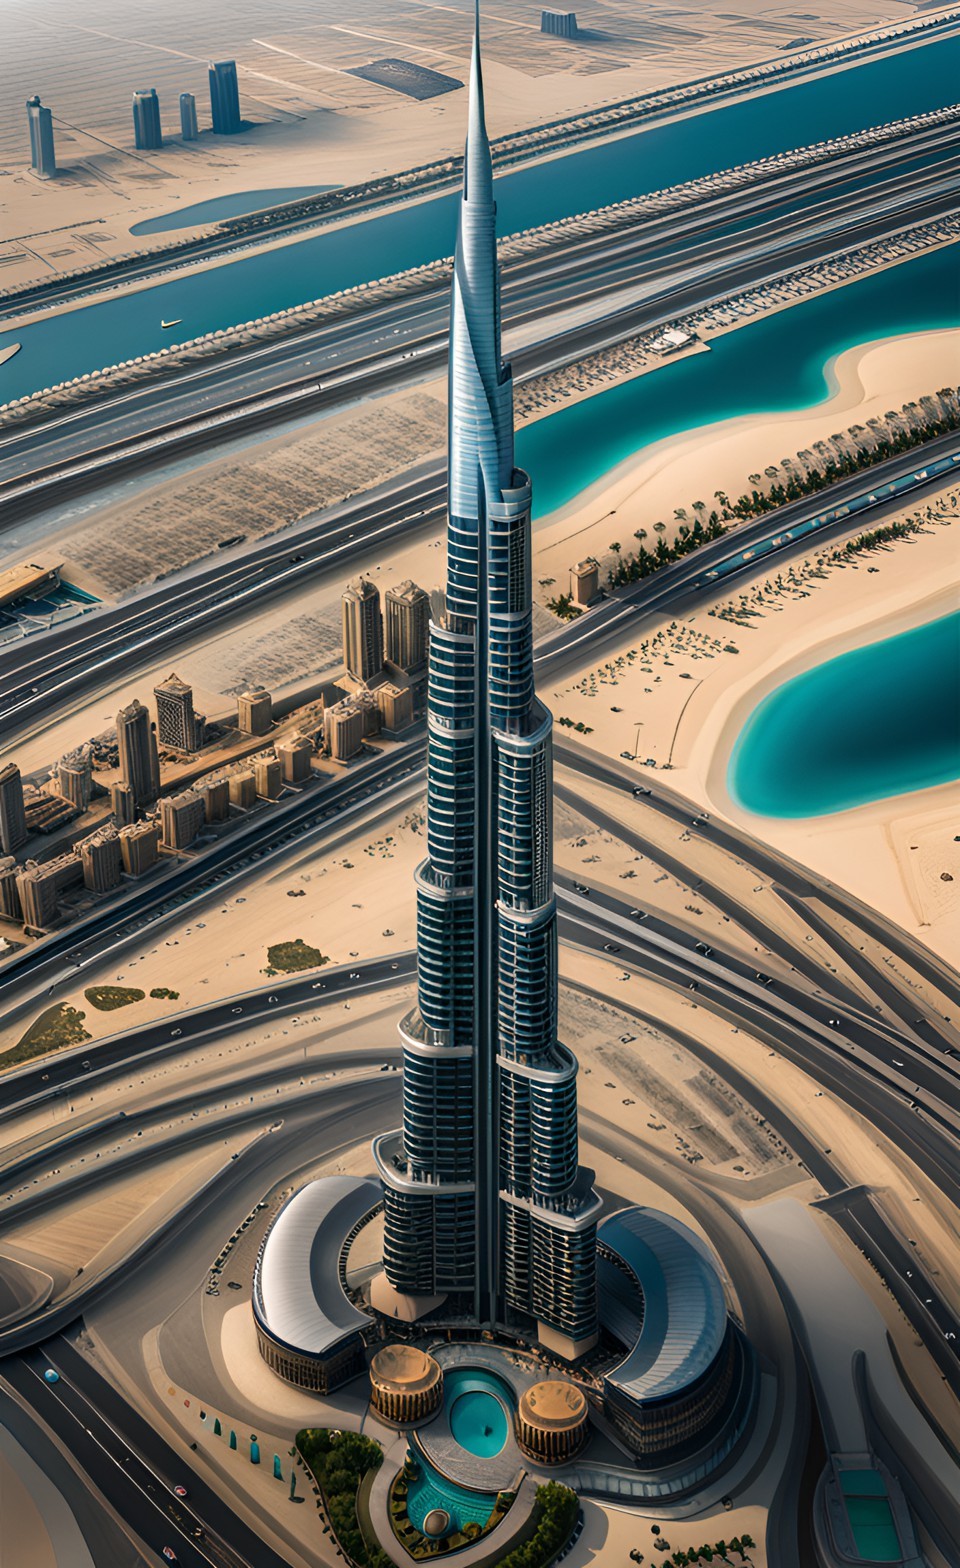 Dubai Burj Khalifa Tower iPhone Wallpaper 4K